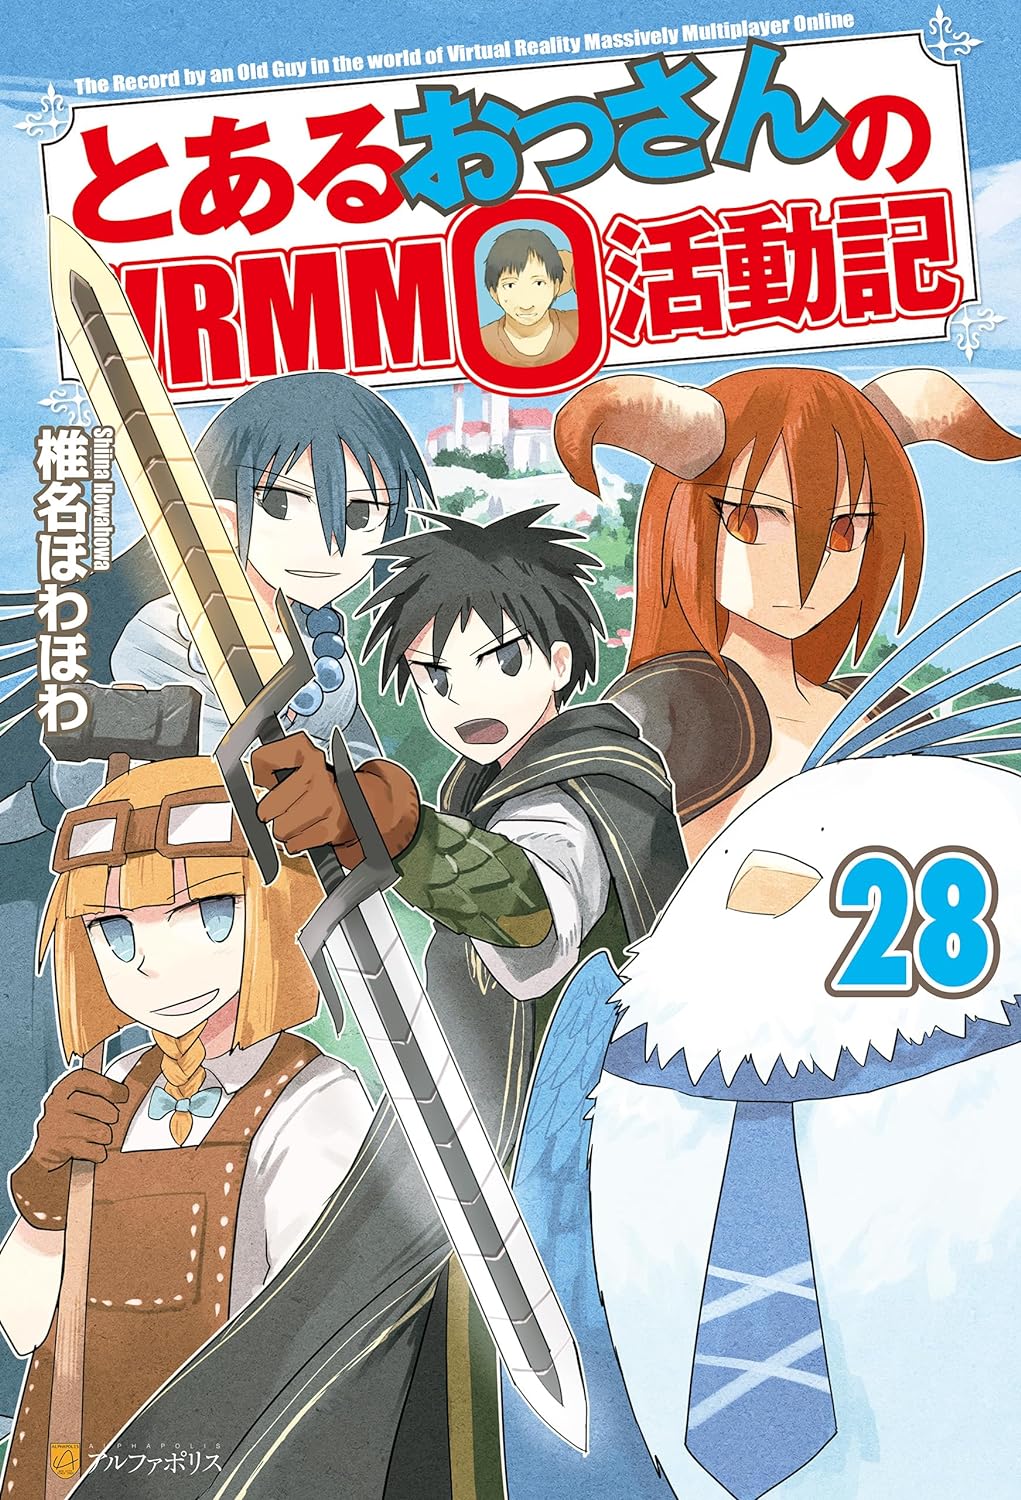 bernardo otaku  MangaWorld™ Amino